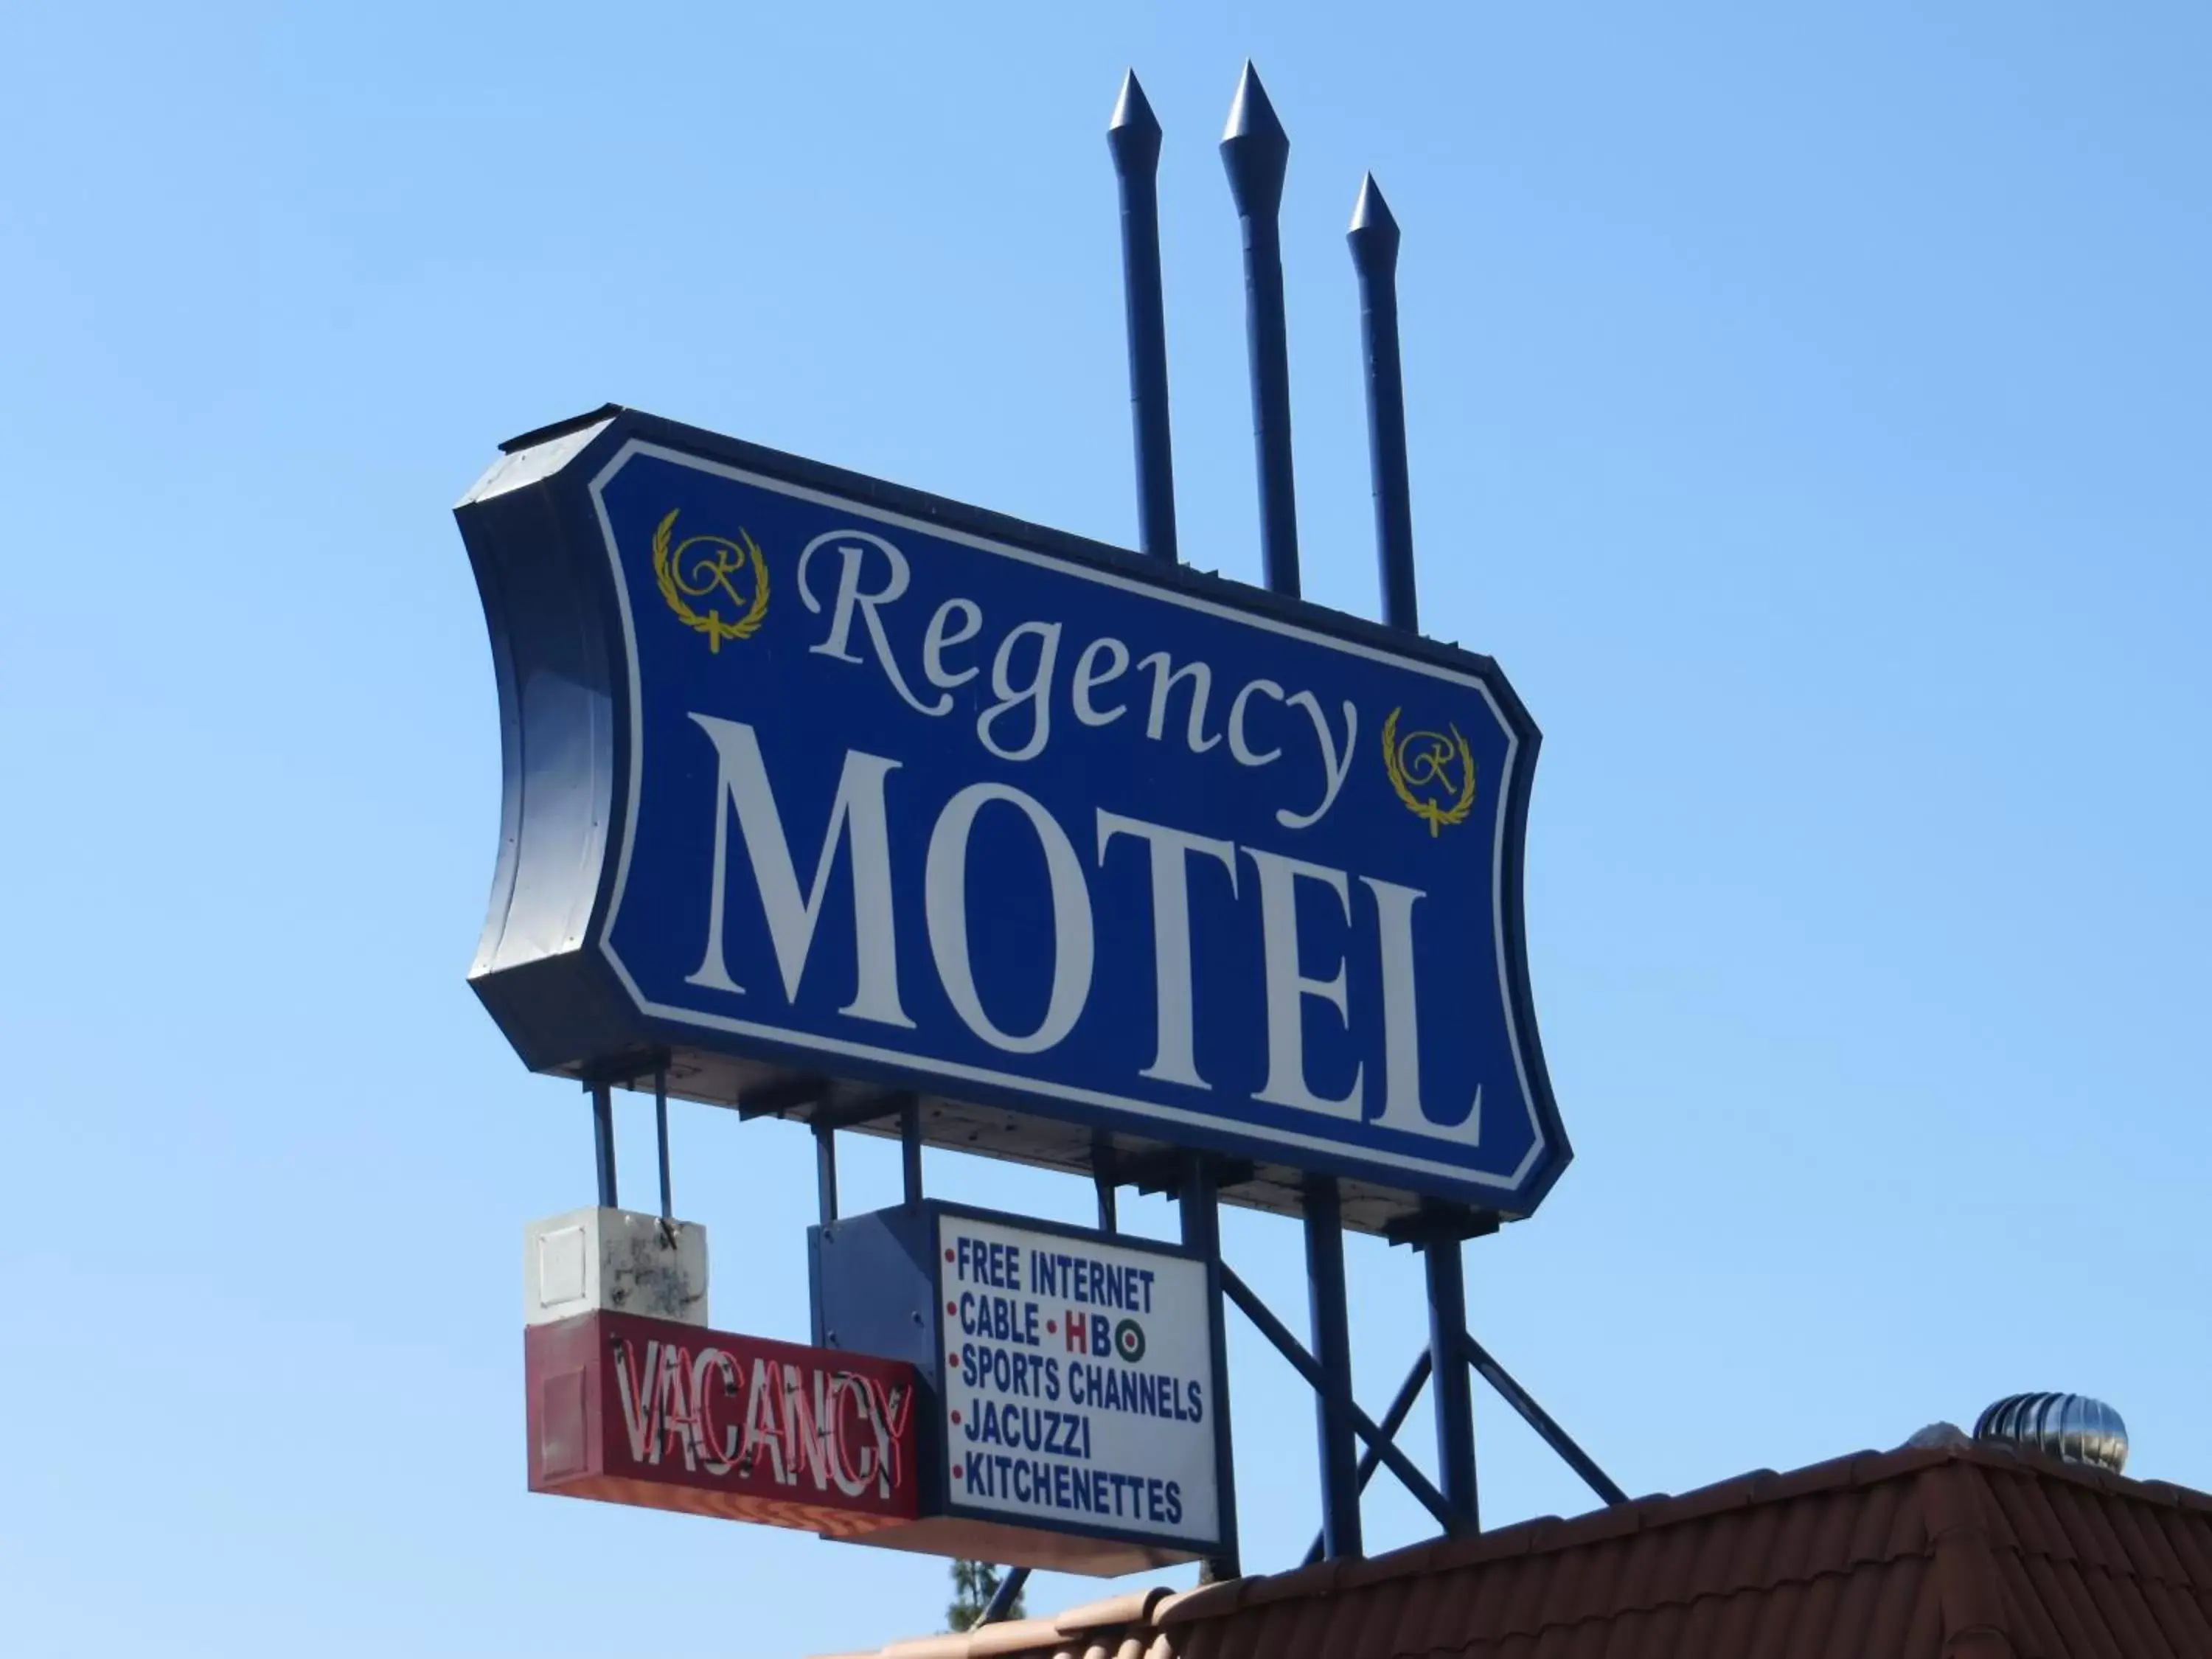 Property logo or sign in Regency Motel